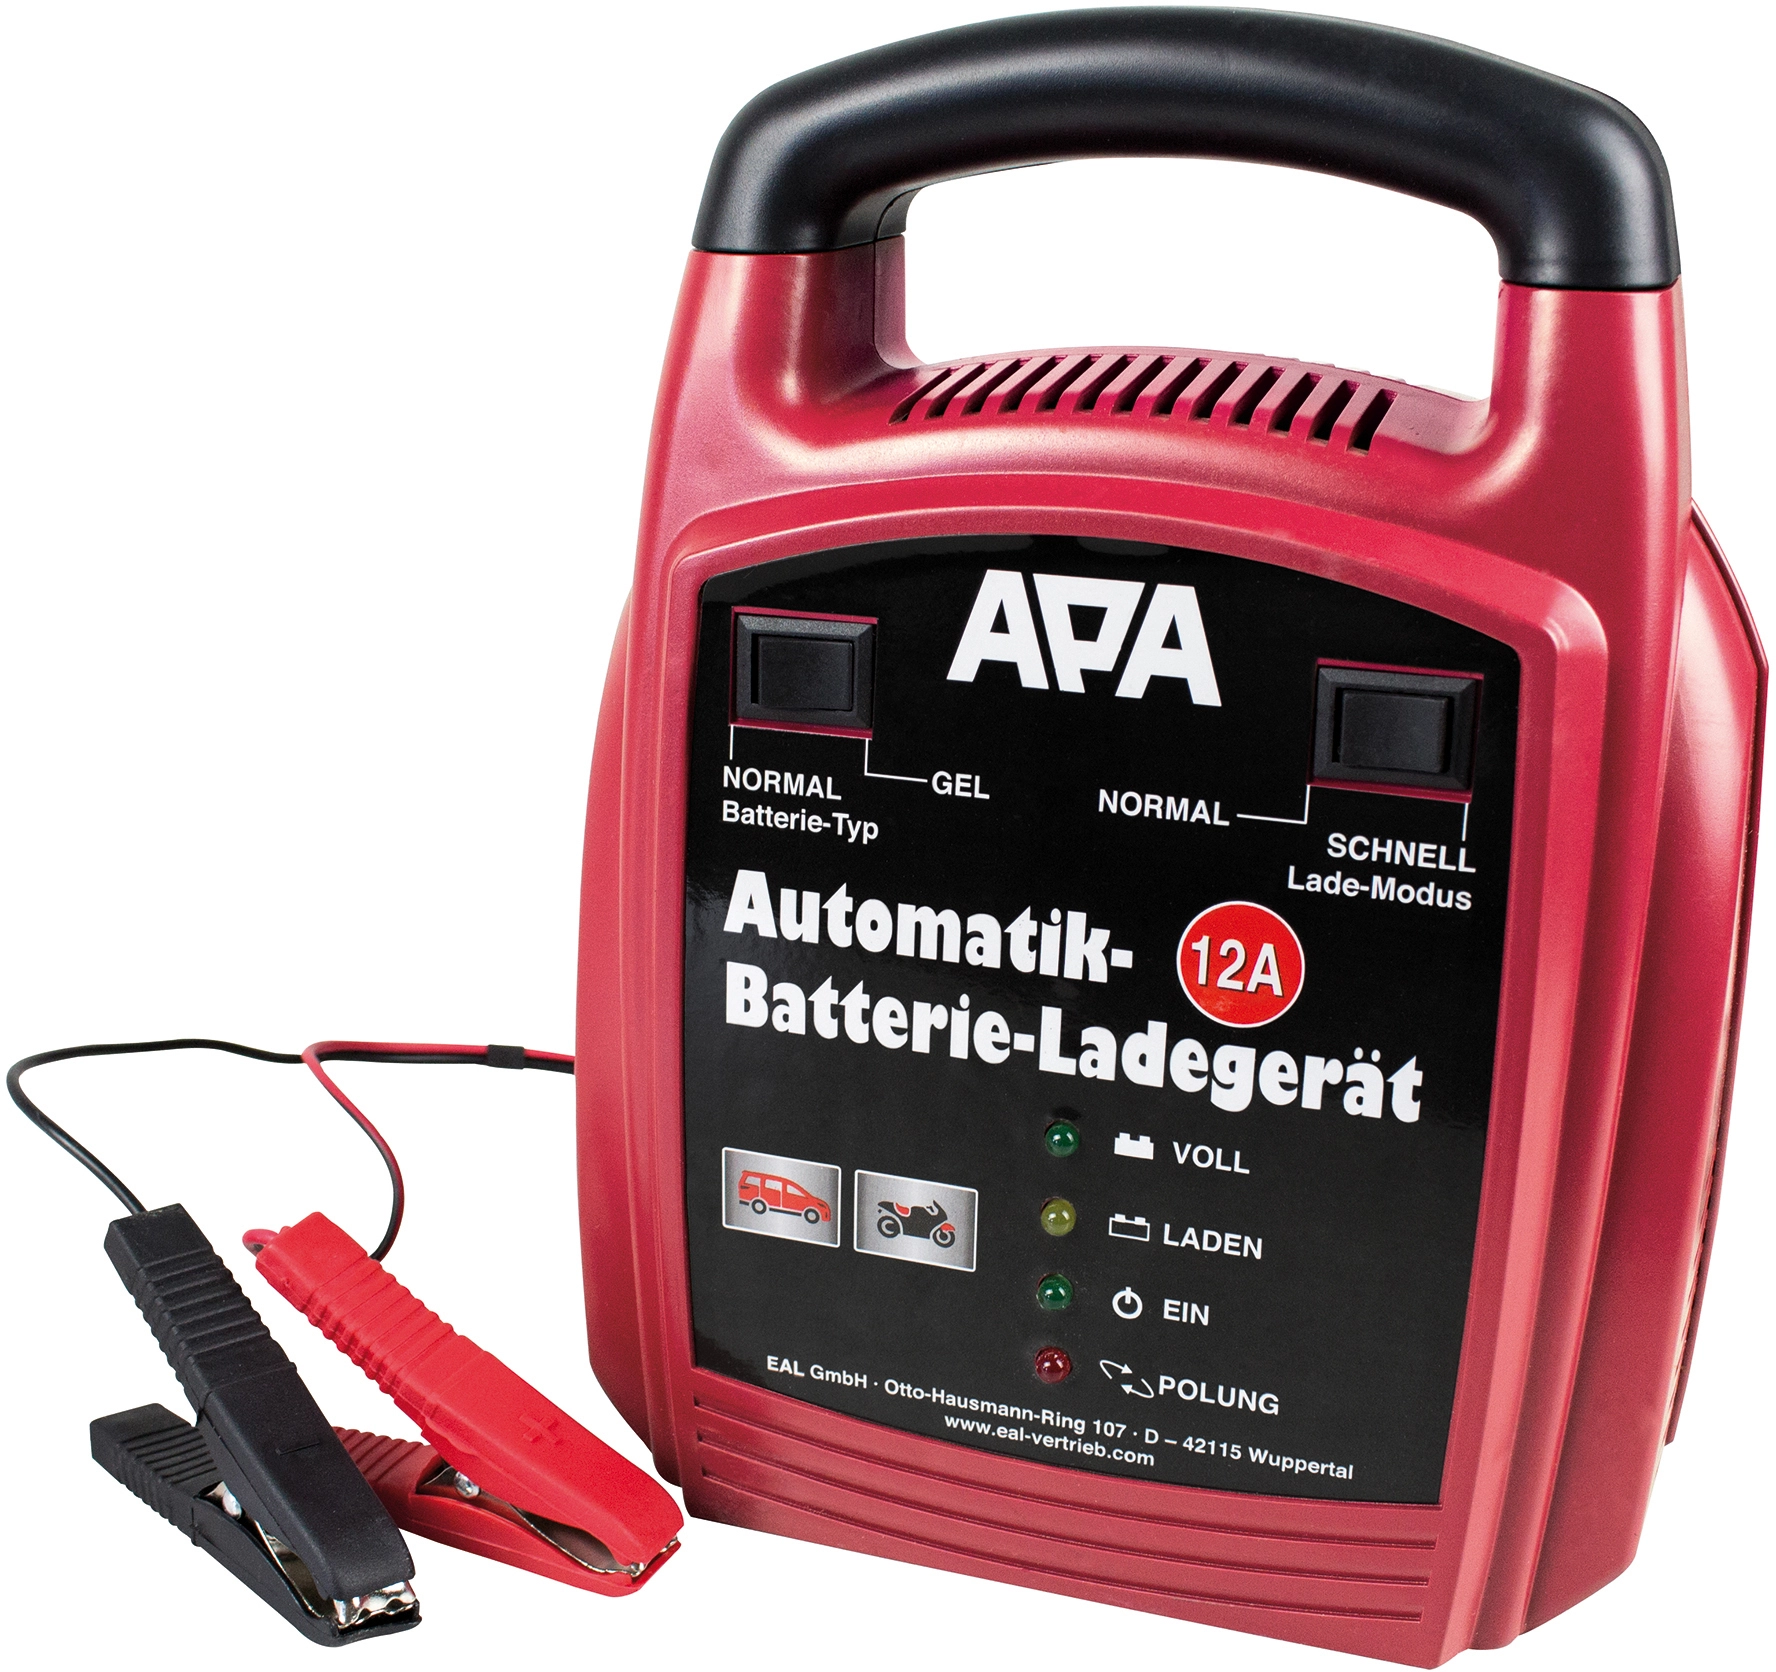 APA Automatik-Batterieladegerät 12 A kaufen bei OBI